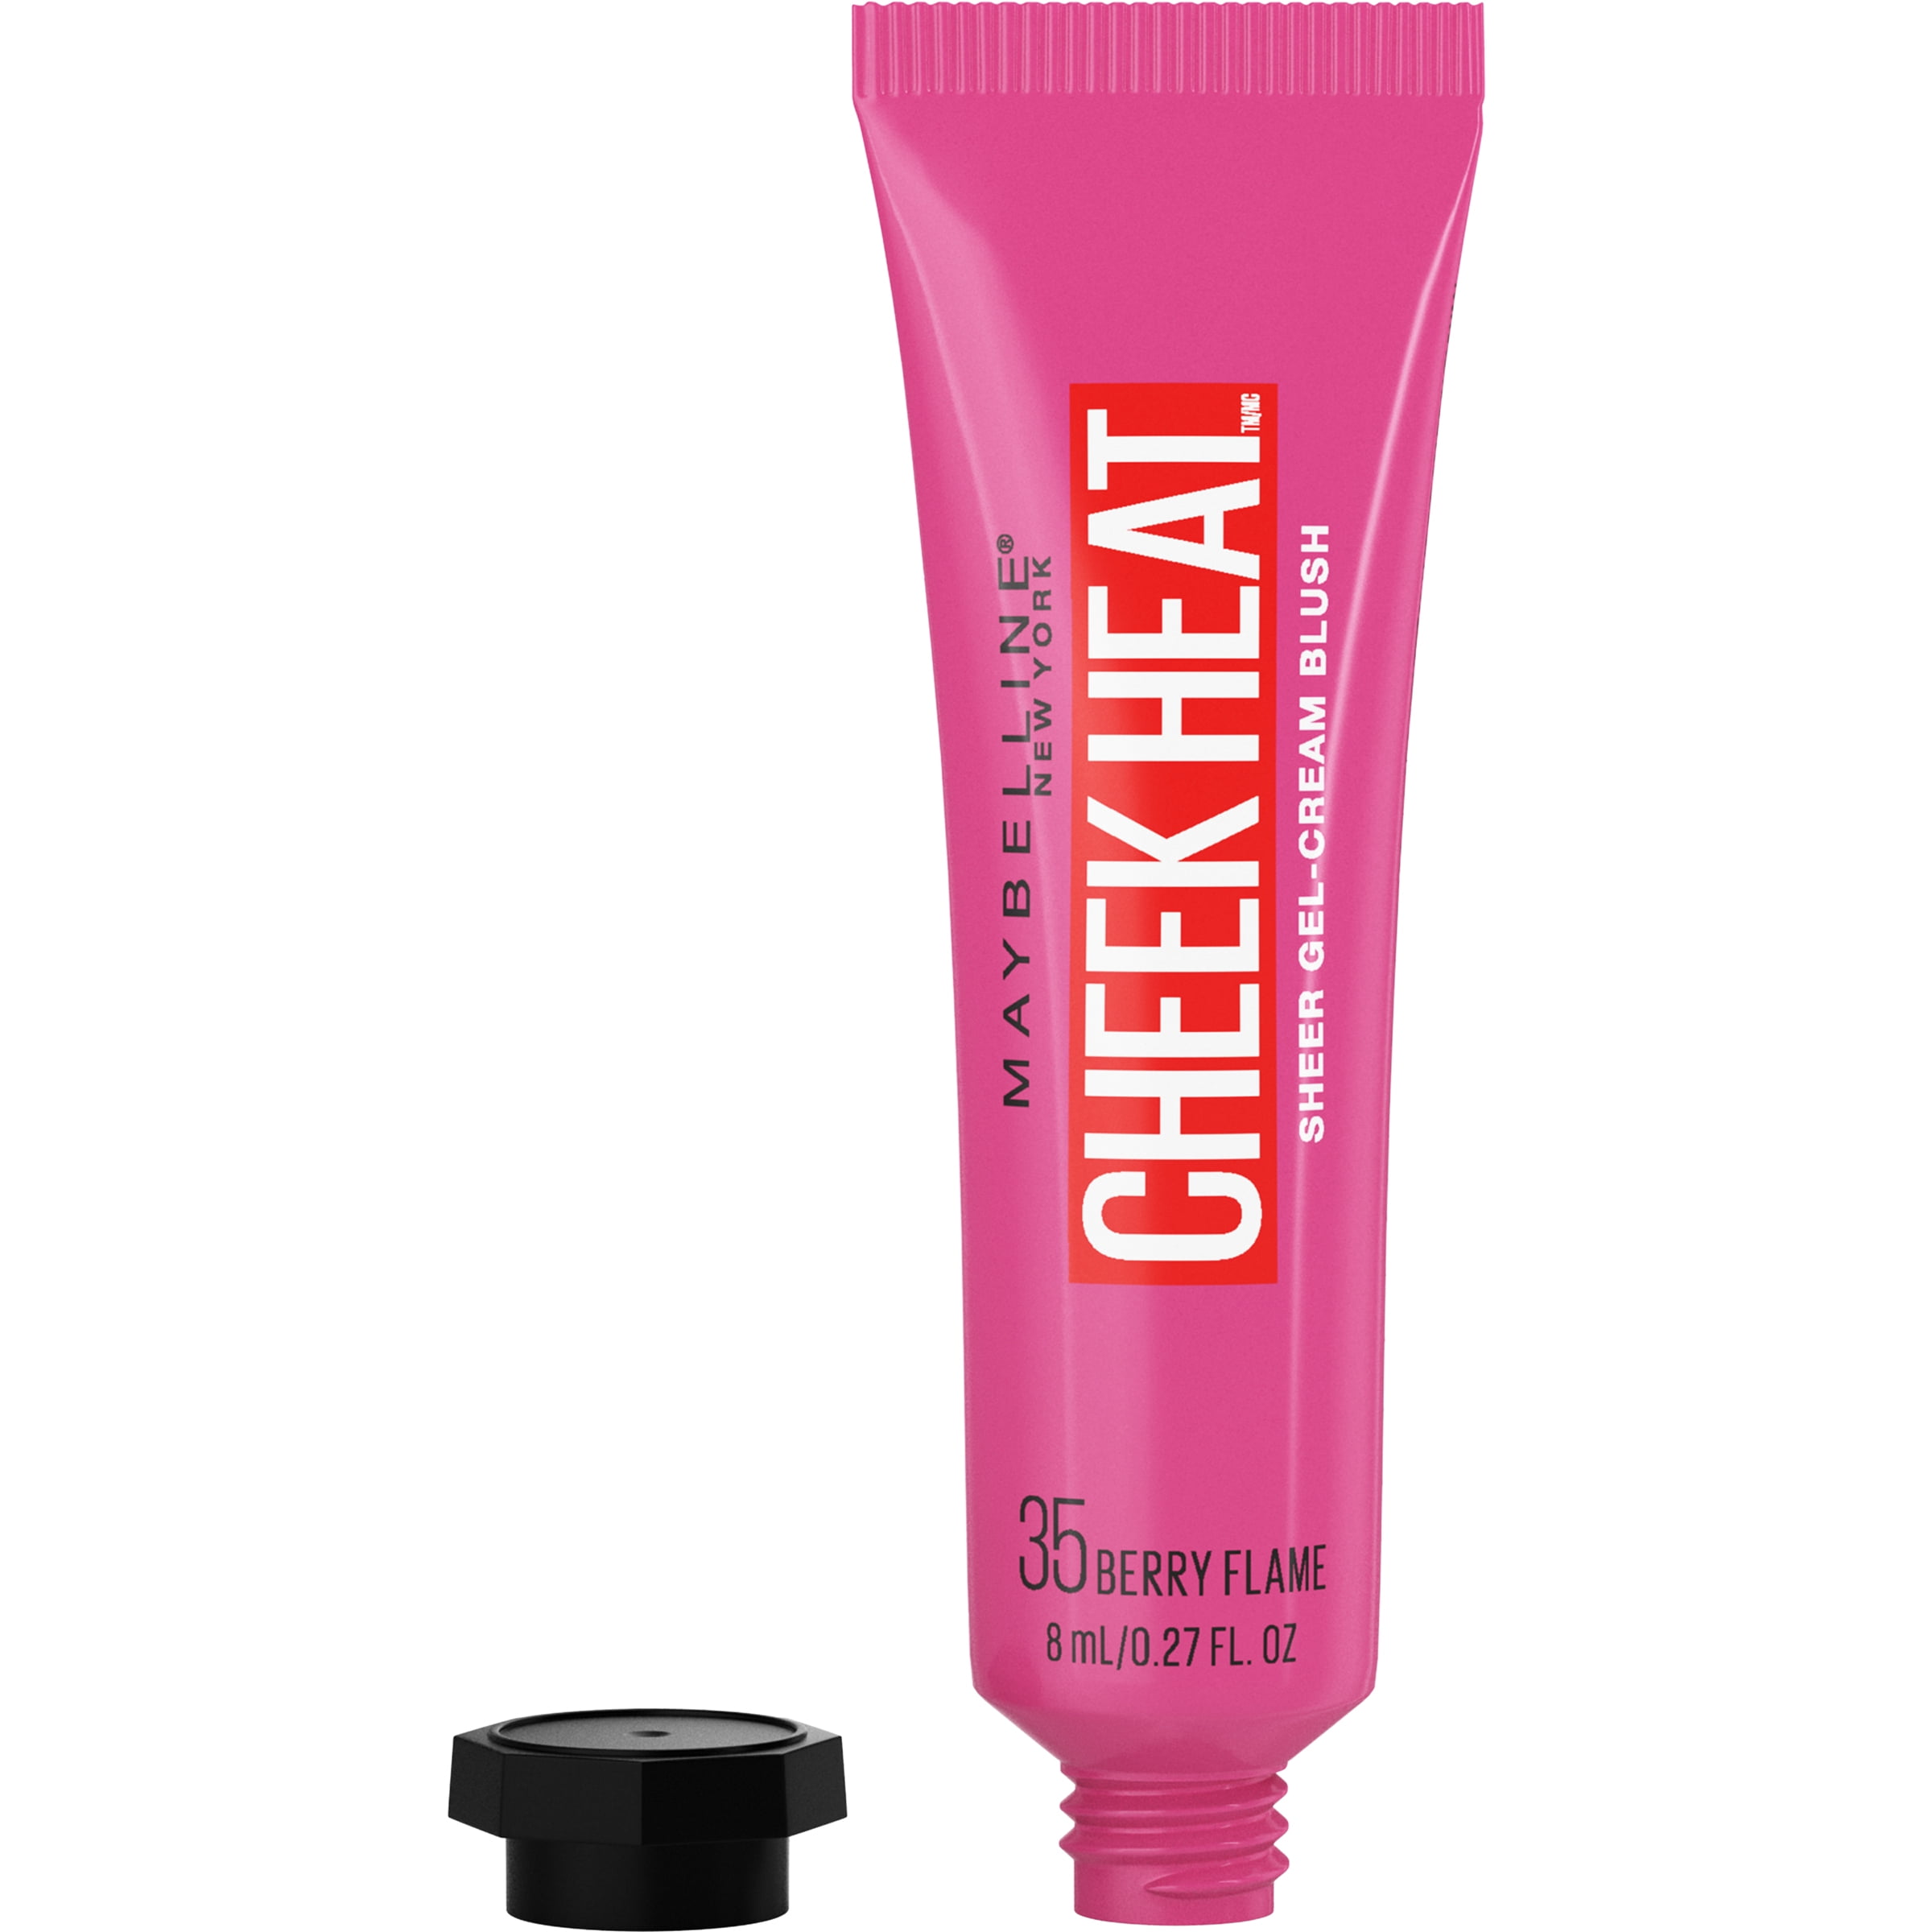 Maybelline Cheek Heat Gel Cream Blush, Face Makeup, Fuchsia Spark, 0.27 oz